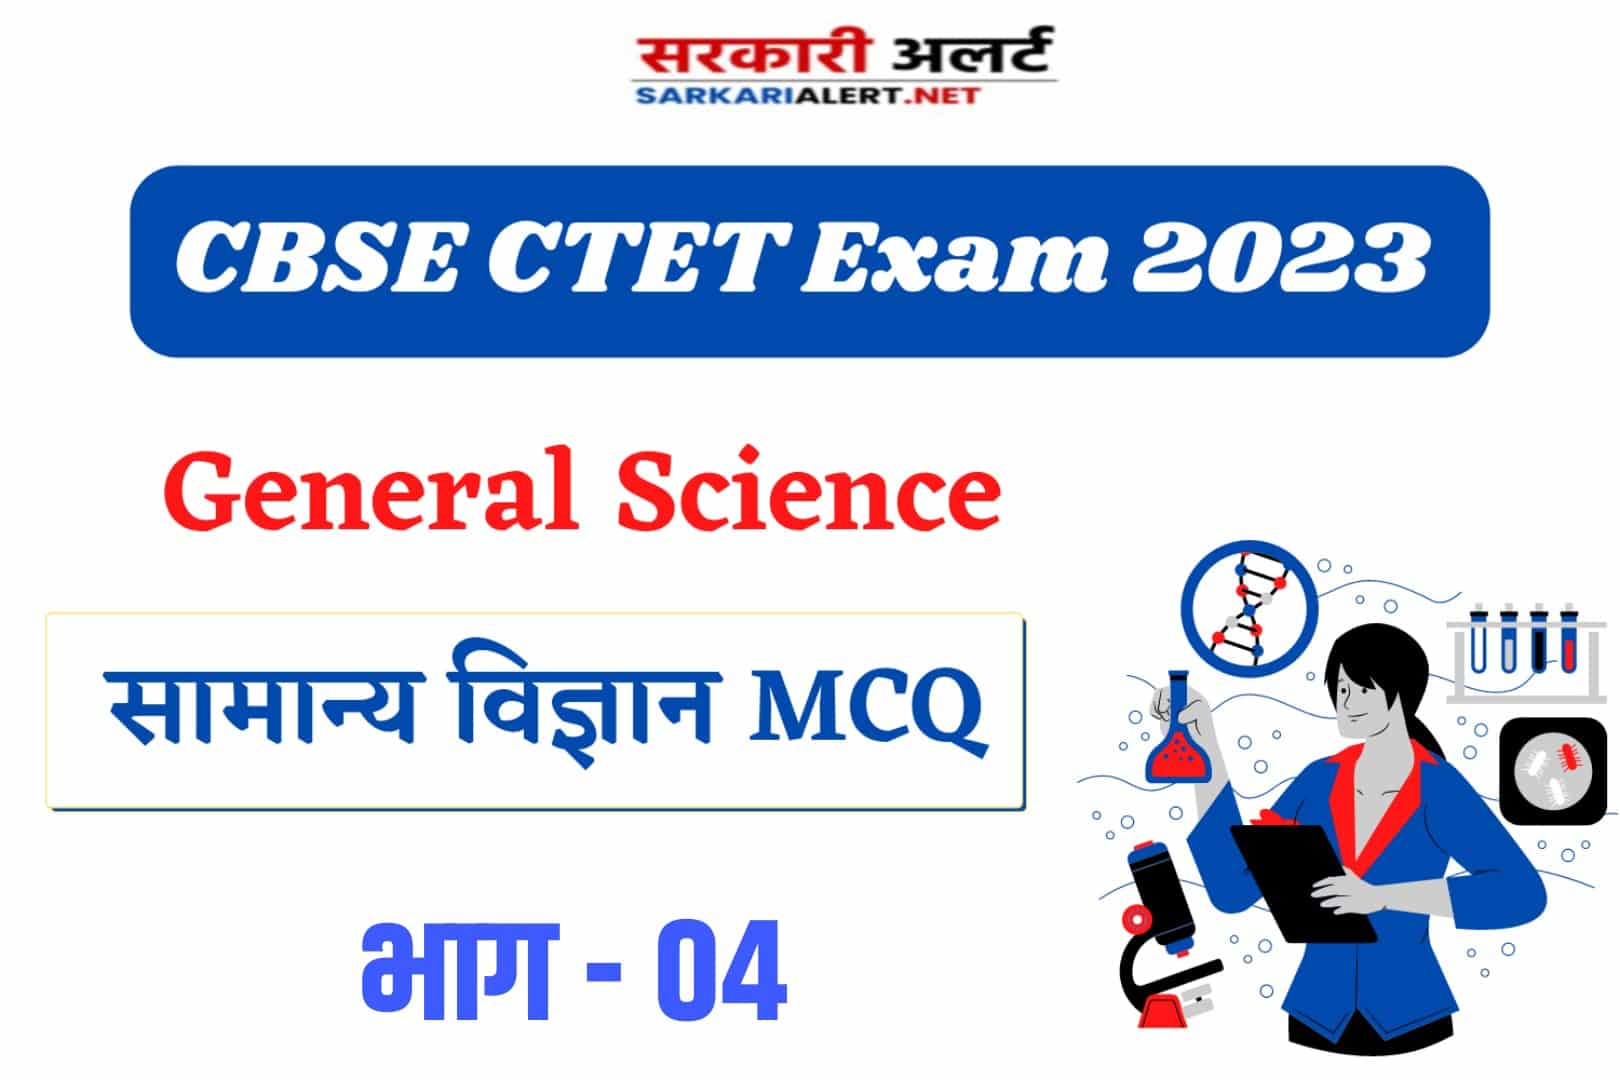 CBSE CTET Exam 2023, Science MCQ - 04 |  सामान्य विज्ञान के महत्वपूर्ण MCQ